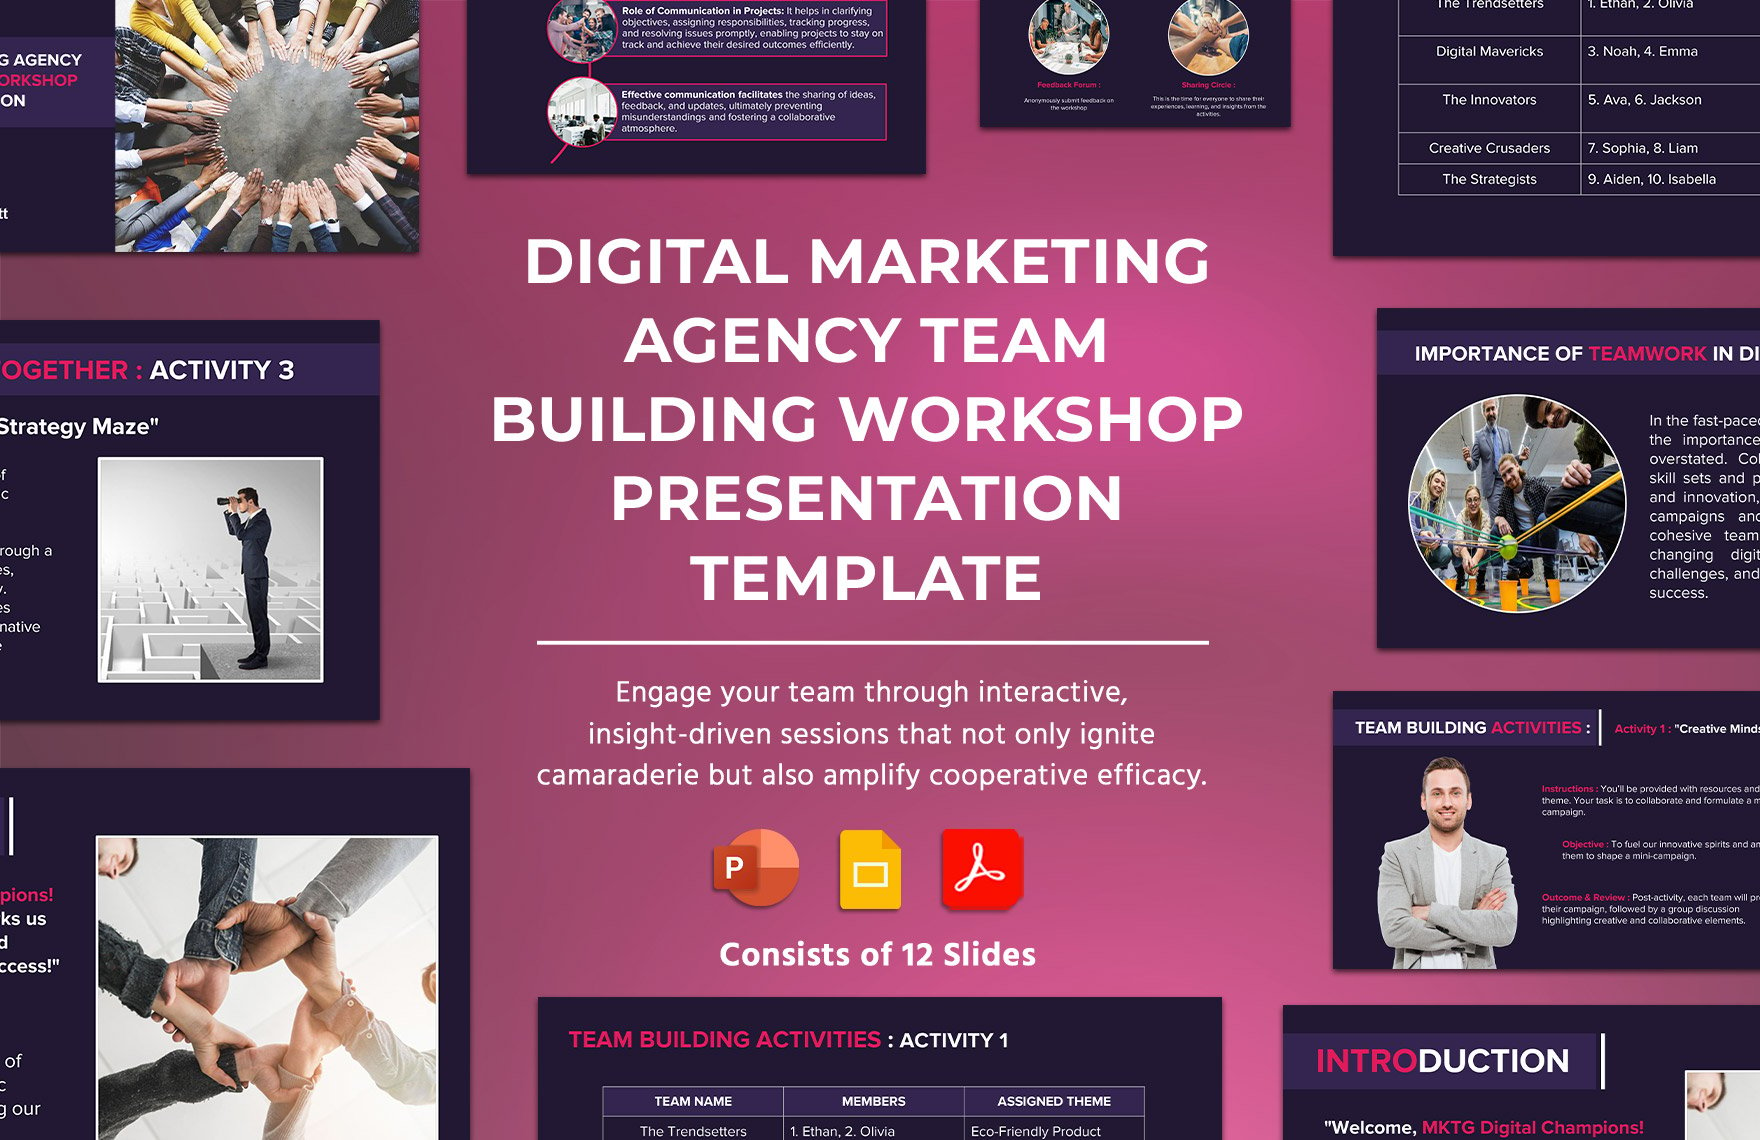 Digital Marketing Agency Team Building Workshop Presentation Template